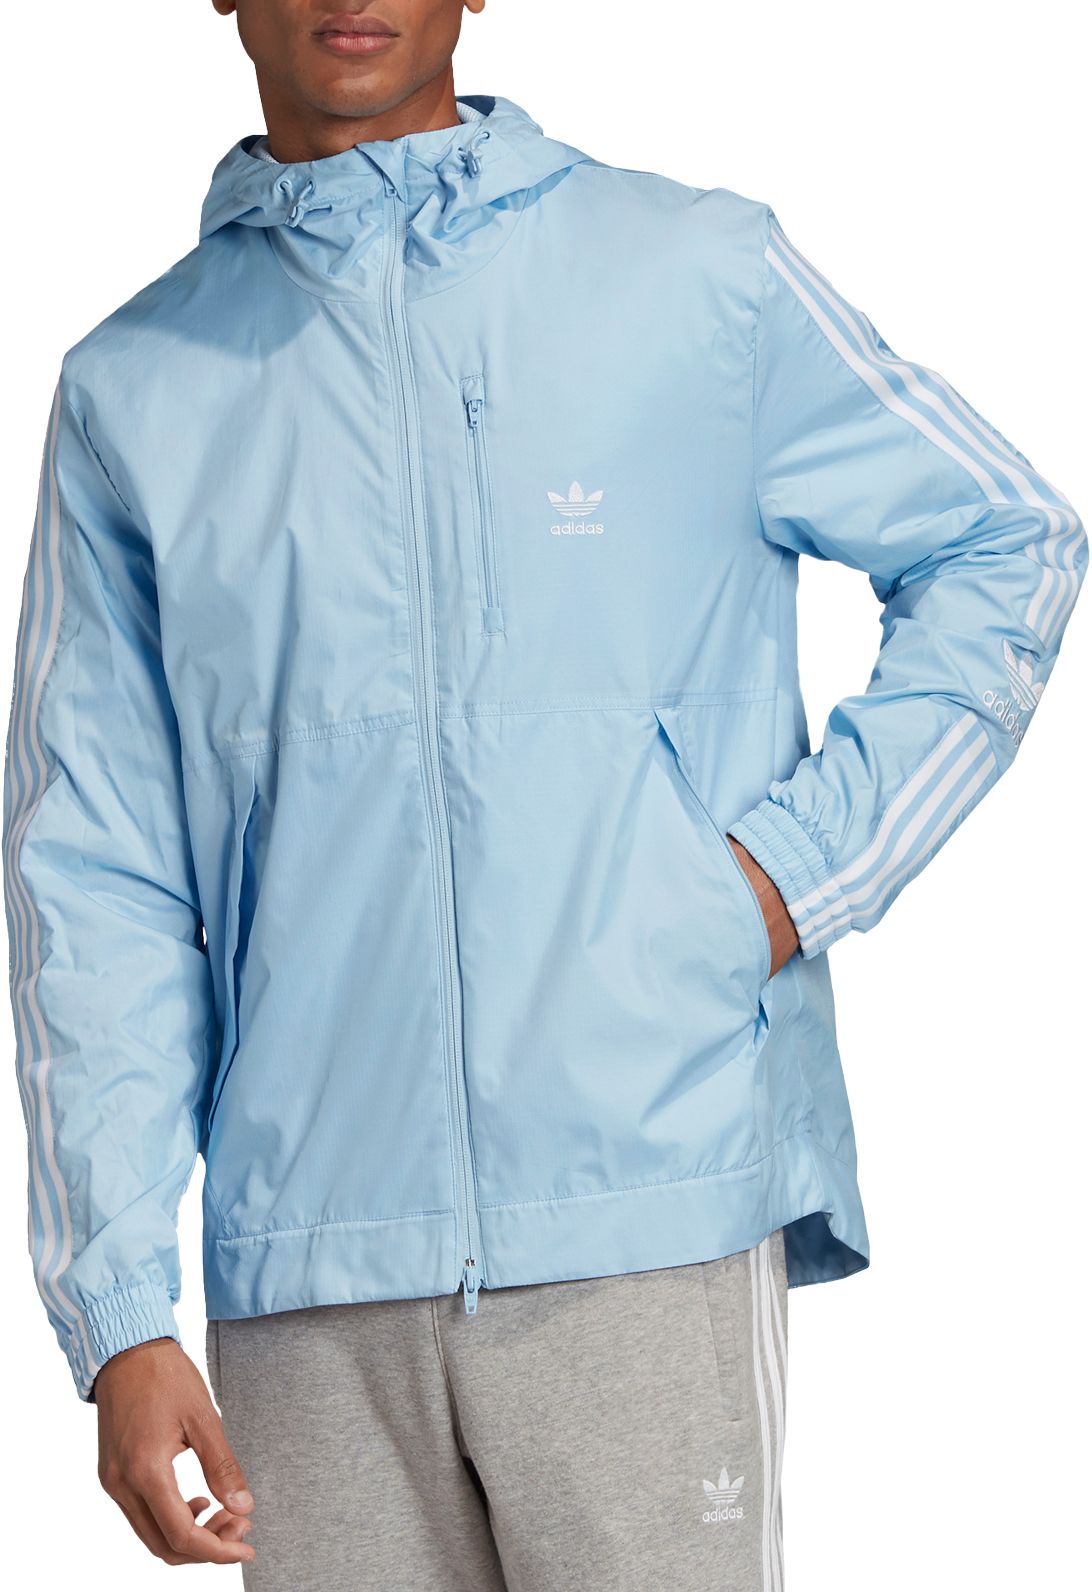 sky blue adidas jacket